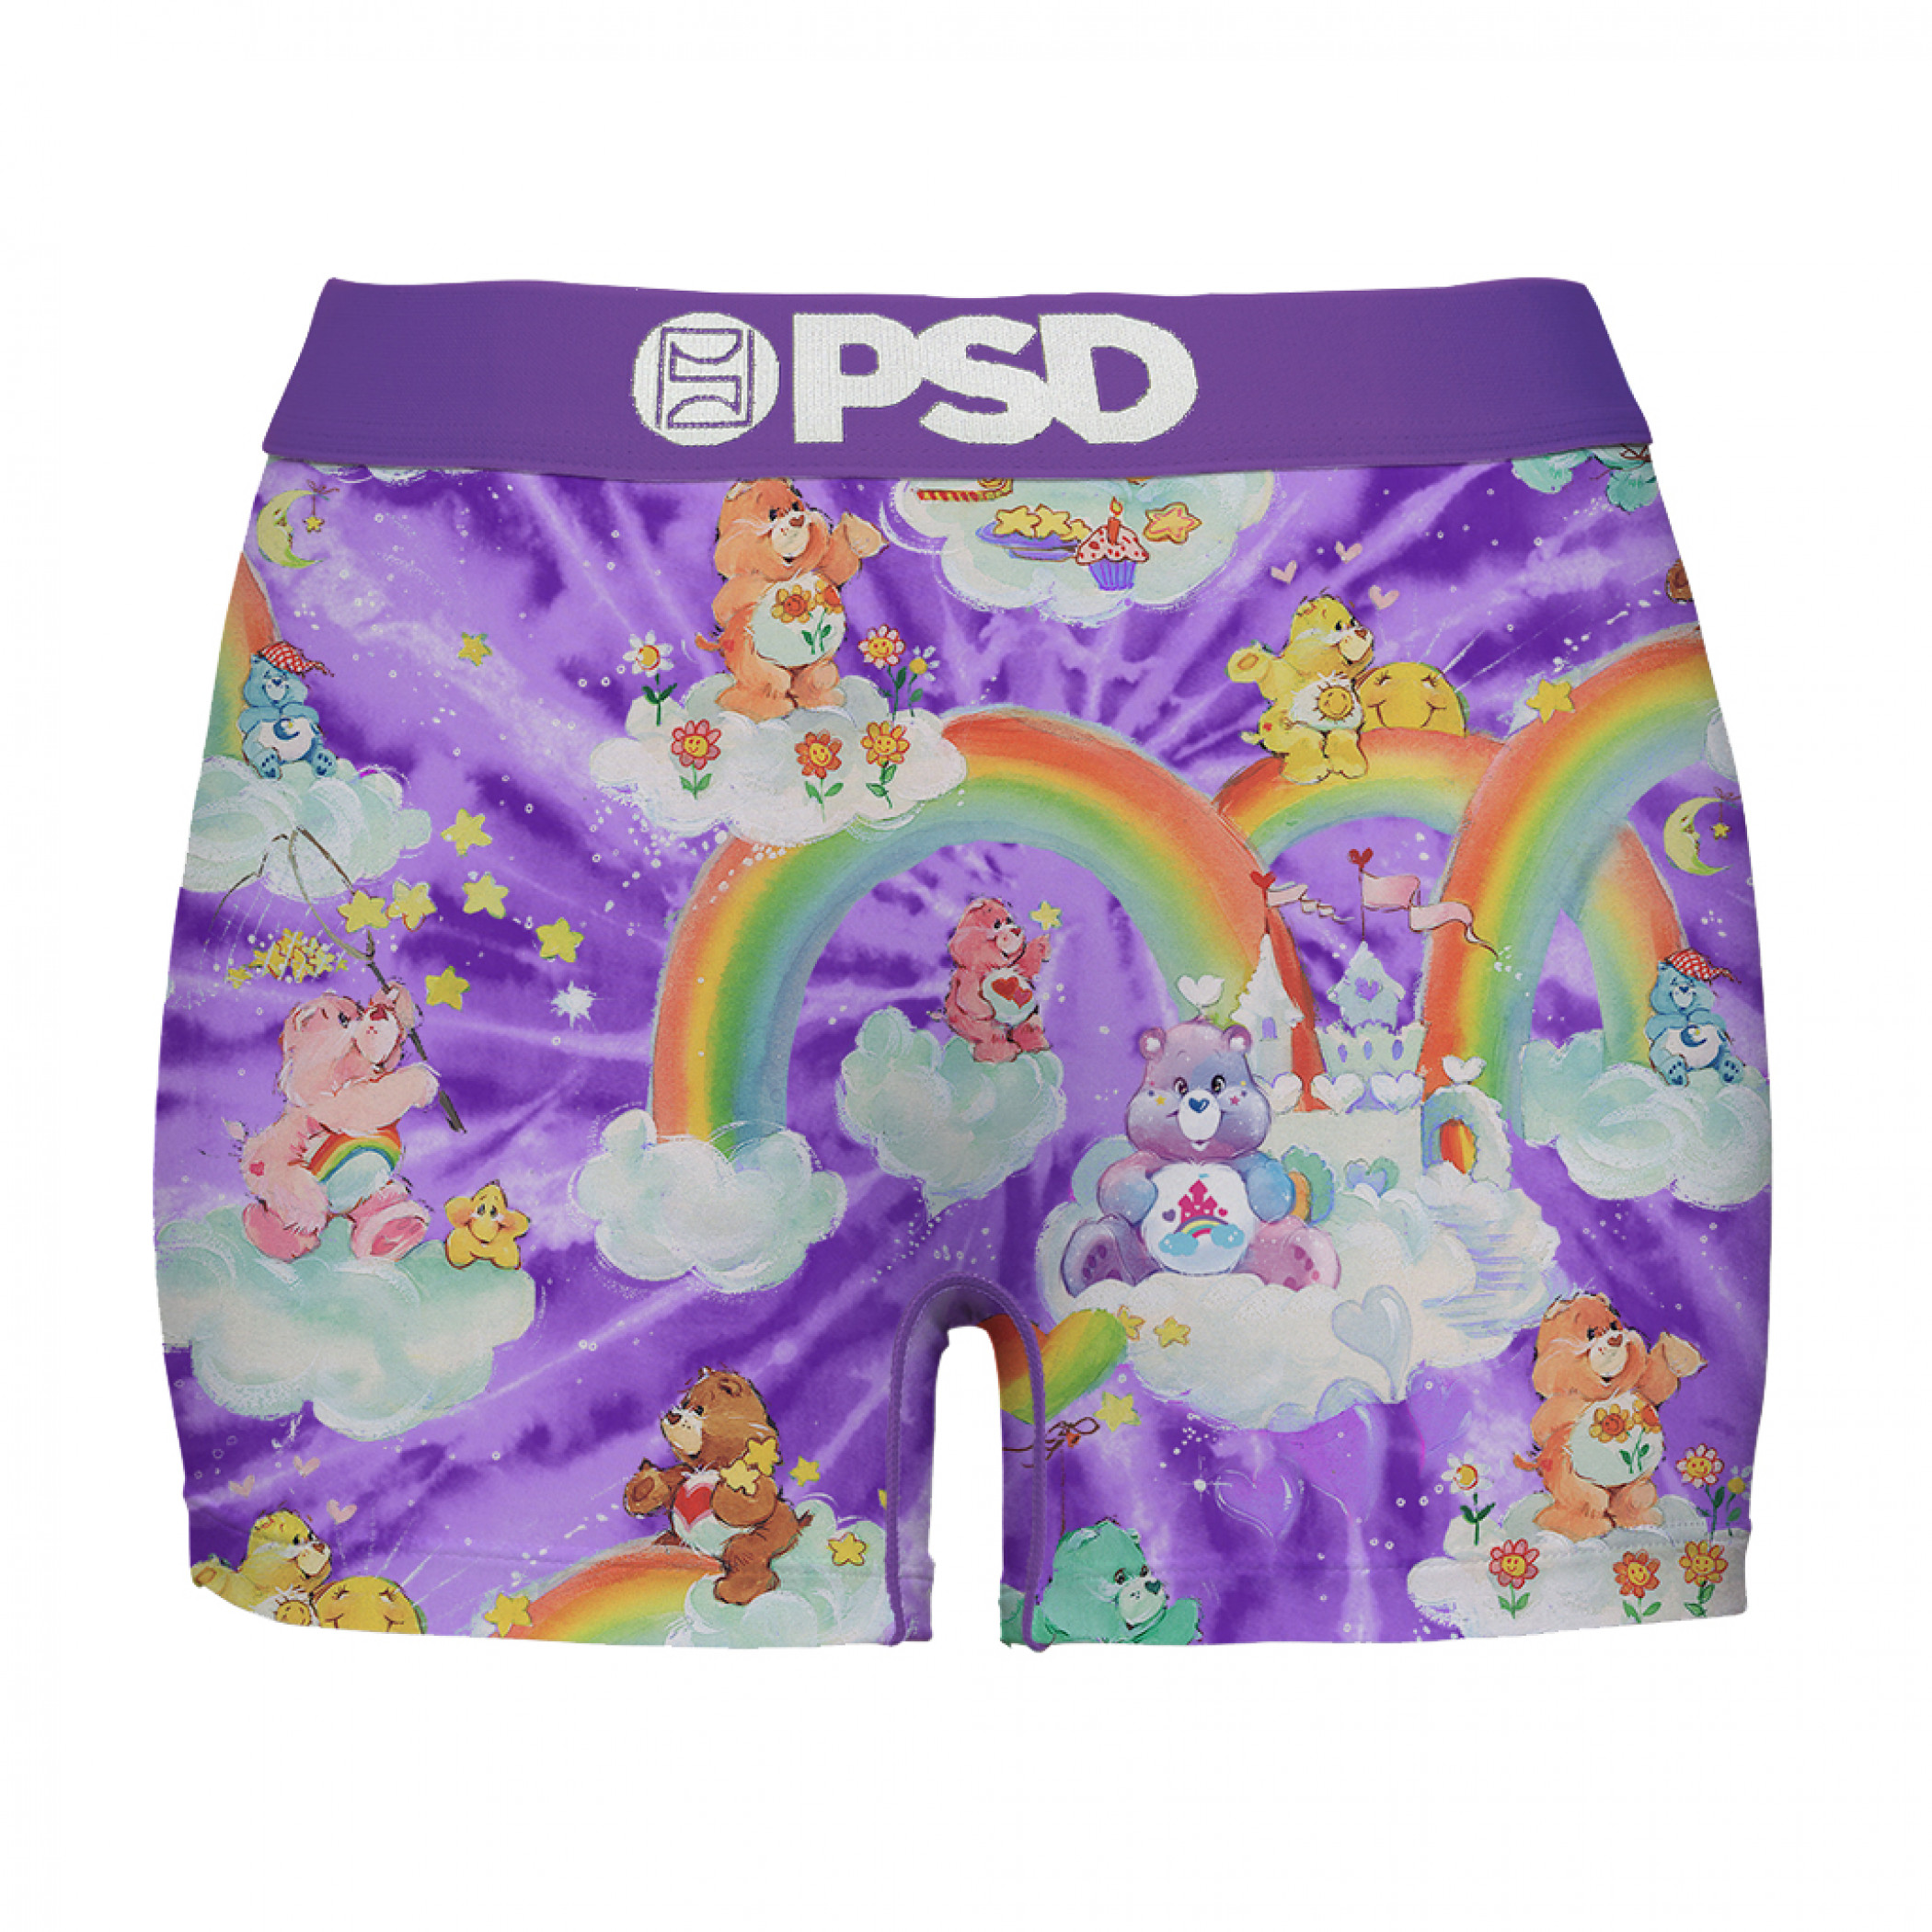 Care Bears Retro Rainbow PSD Boy Shorts Underwear